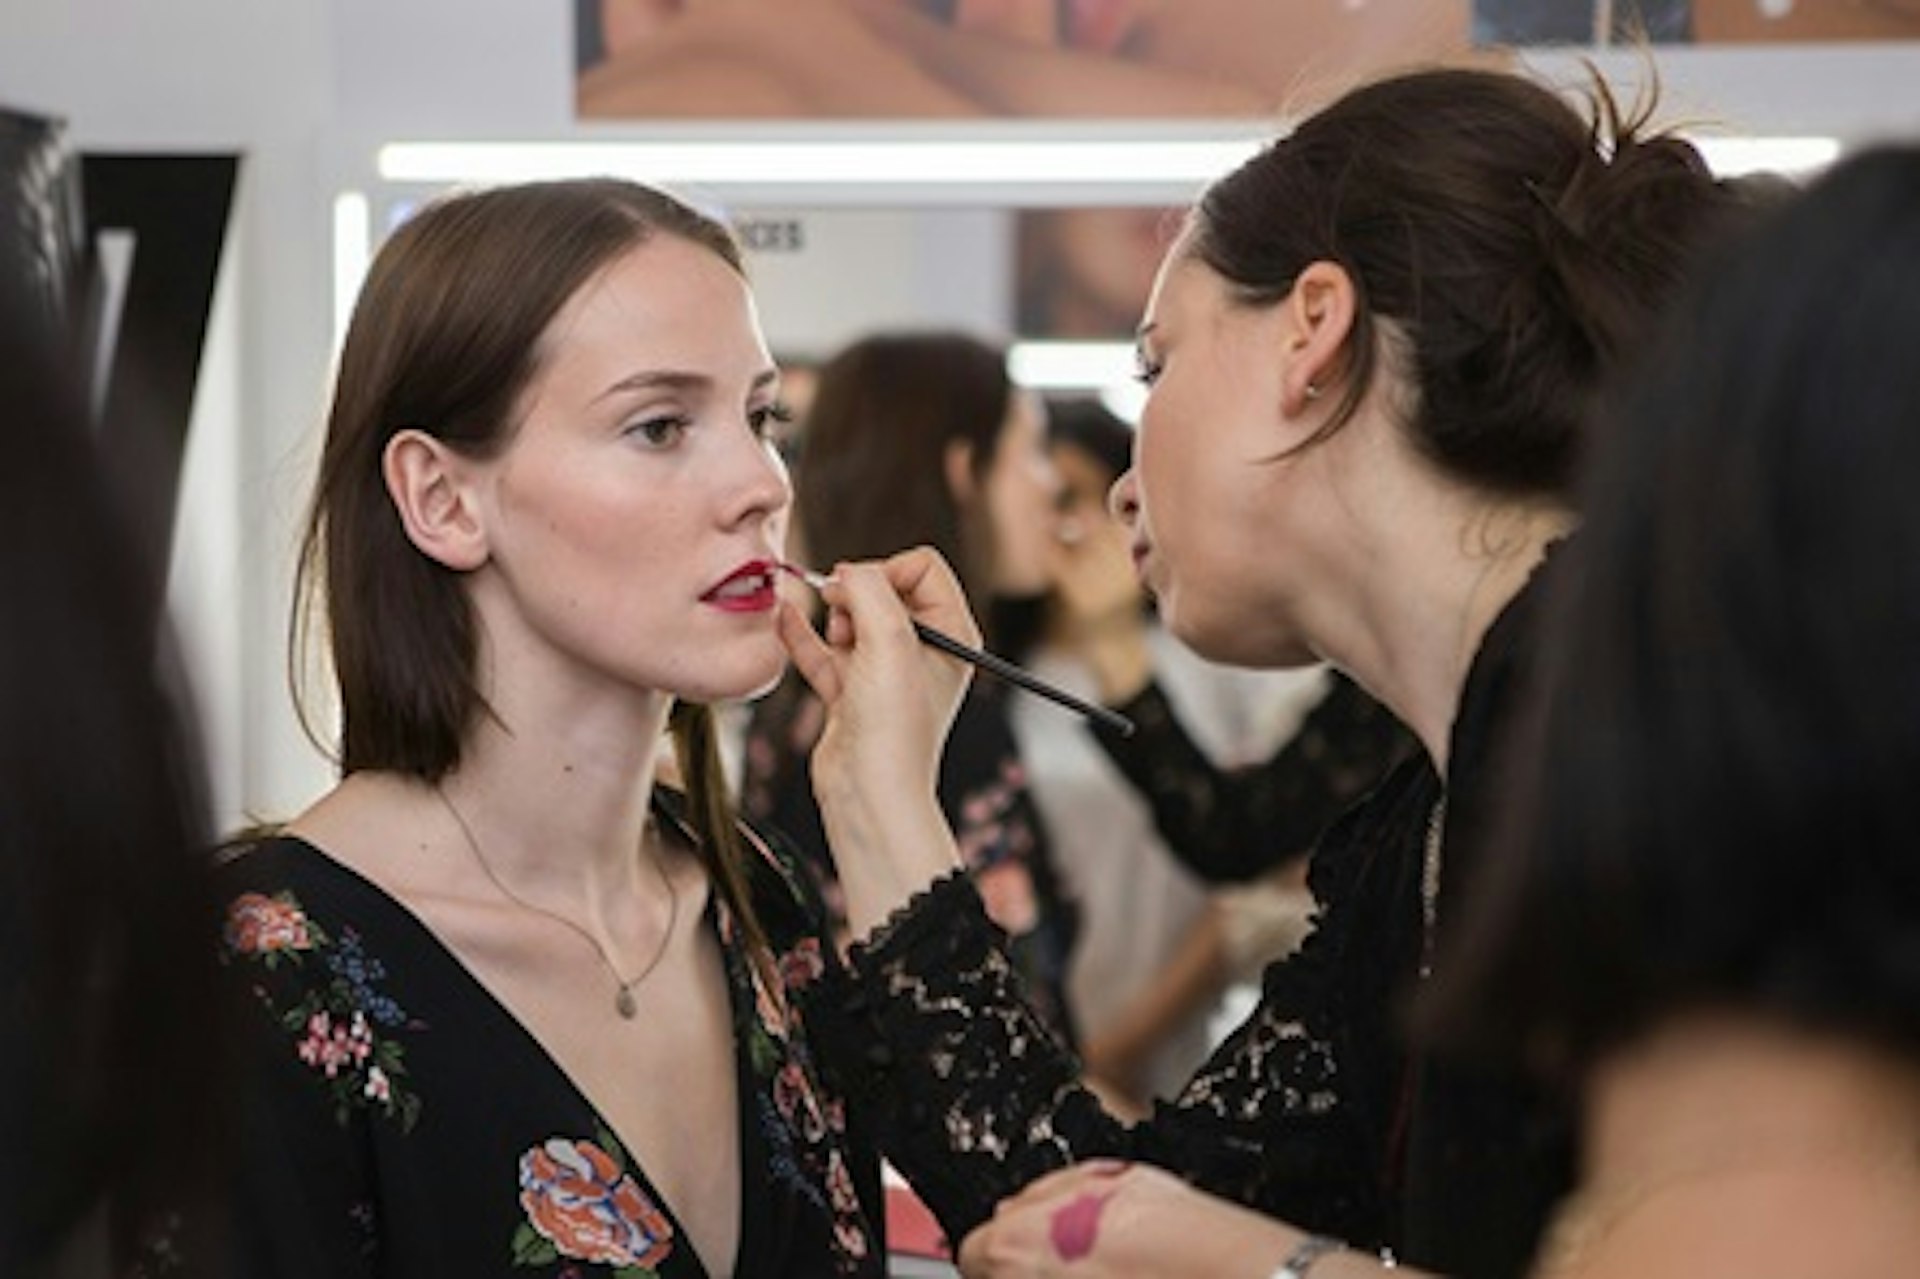 Skincare and Makeup Masterclass at London Beauty Artists 3